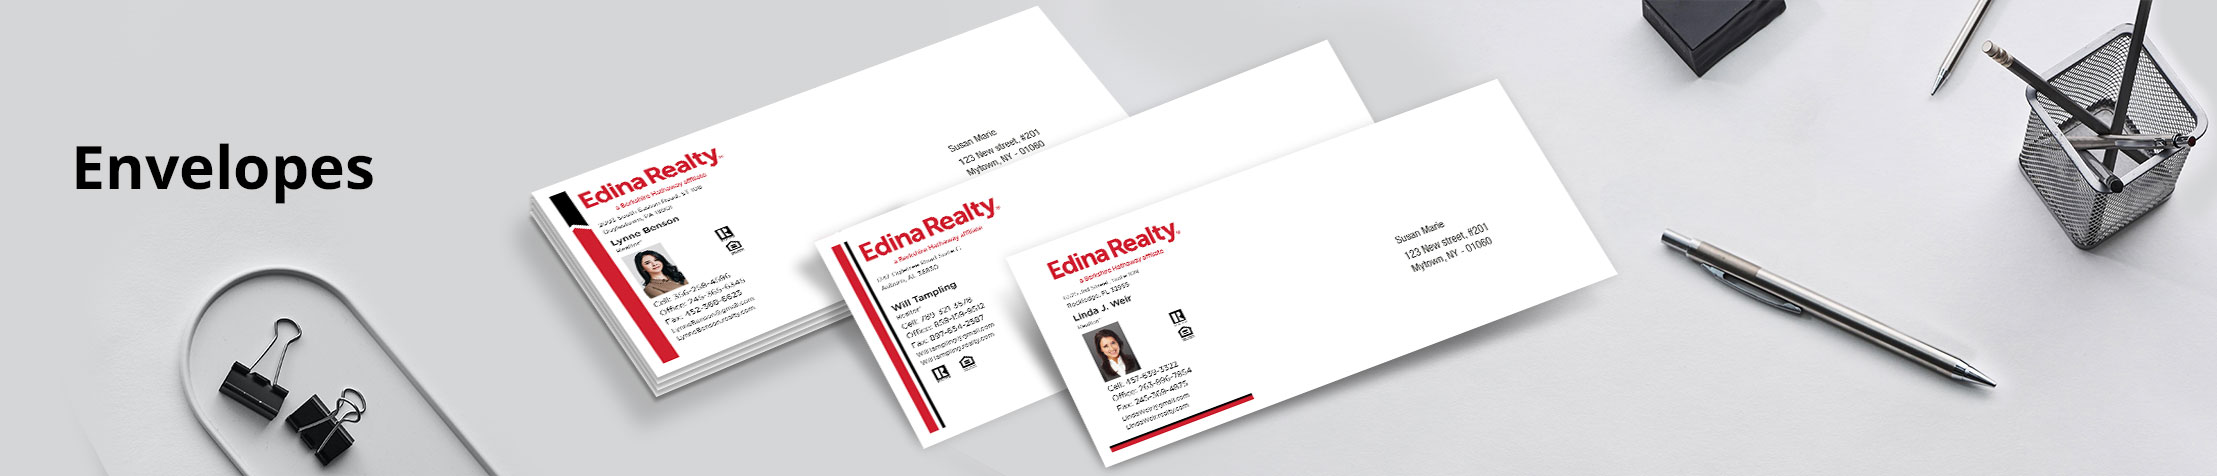 Edina Realty Real Estate #10 Envelopes - Edina Realty - Custom Stationery Templates for Edina Realty Offices and Real Estate Agents | BestPrintBuy.com